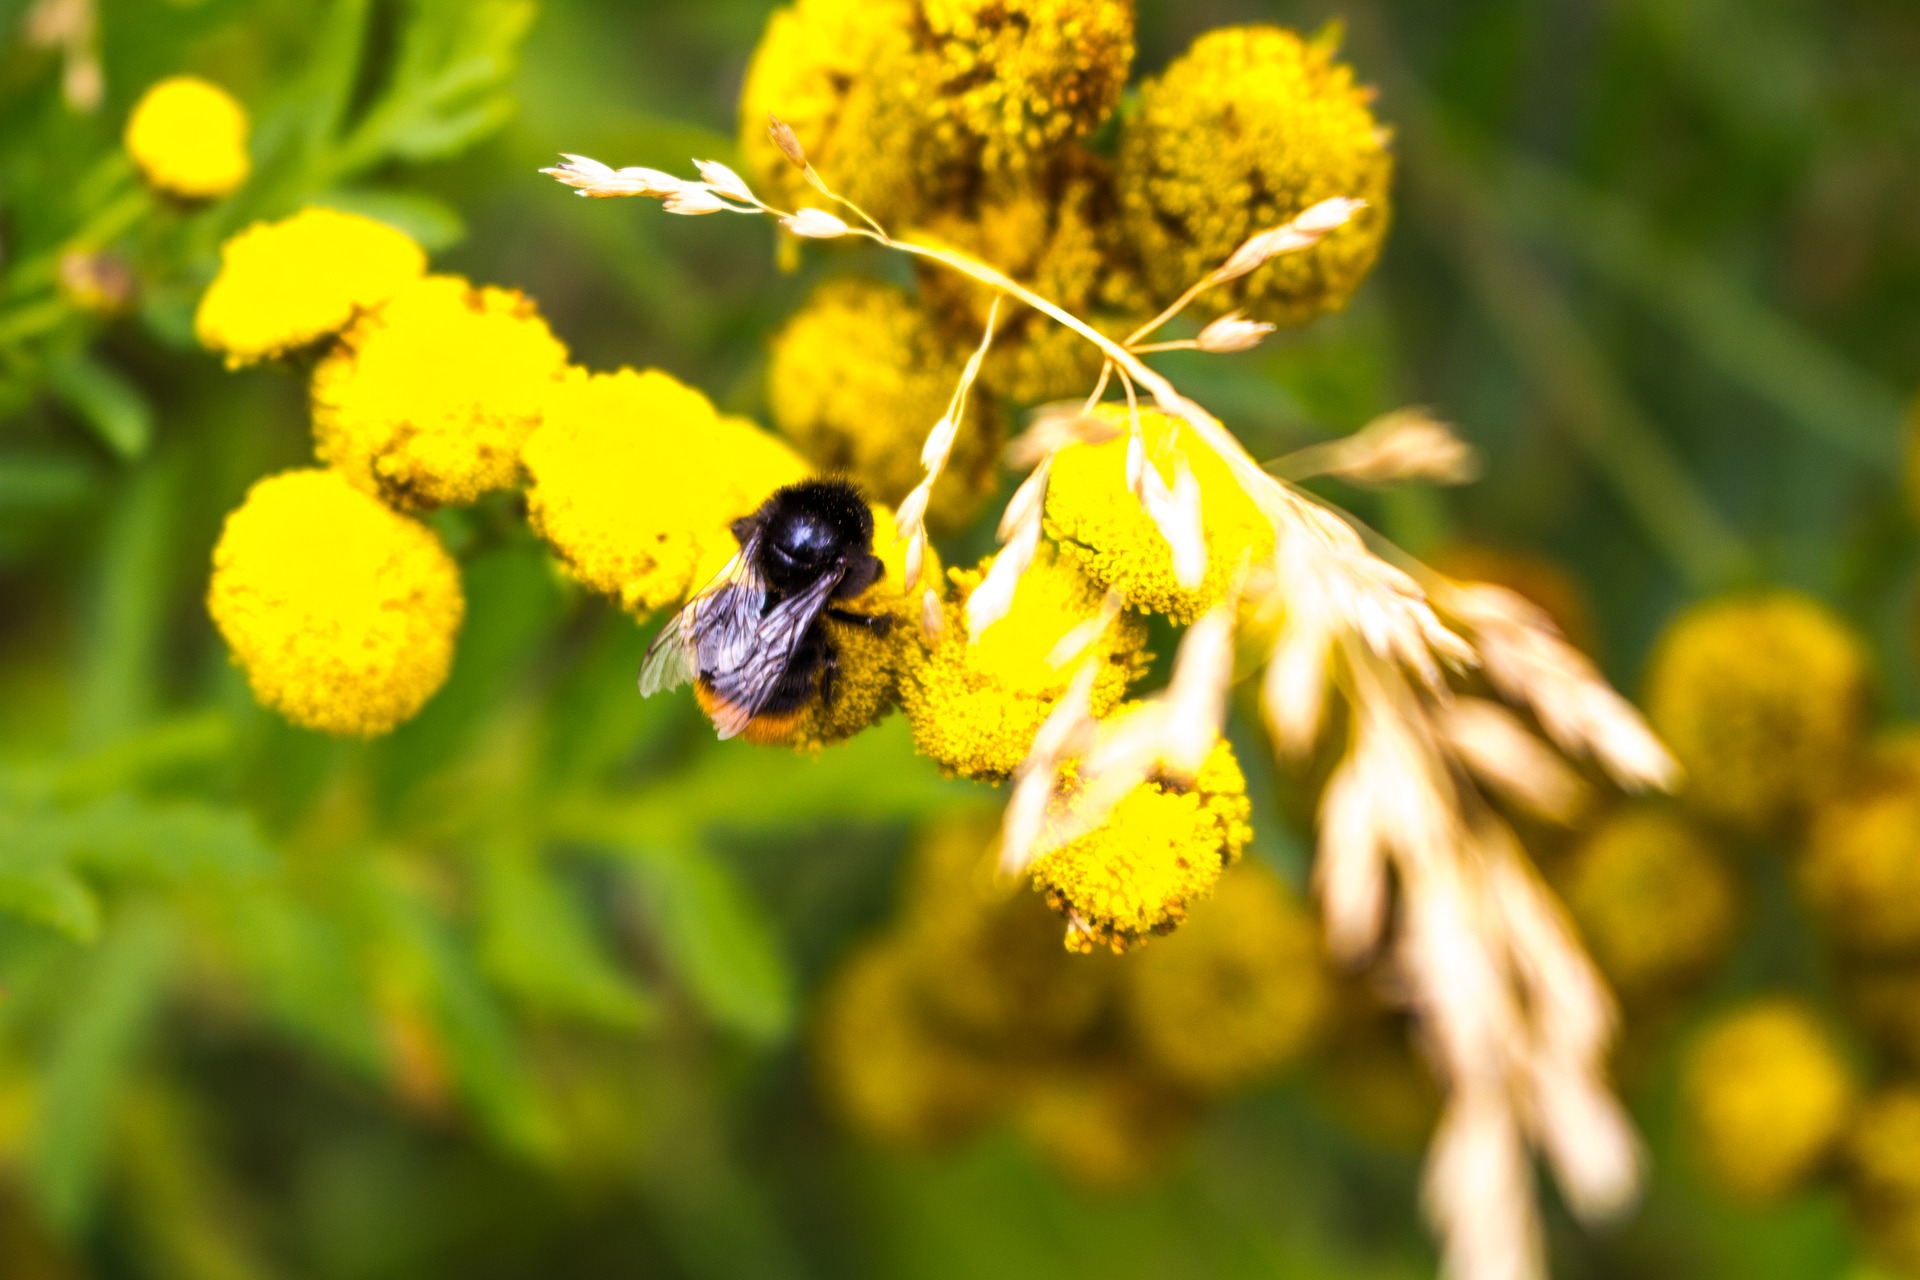 bumblebee-1599130_1920.jpg